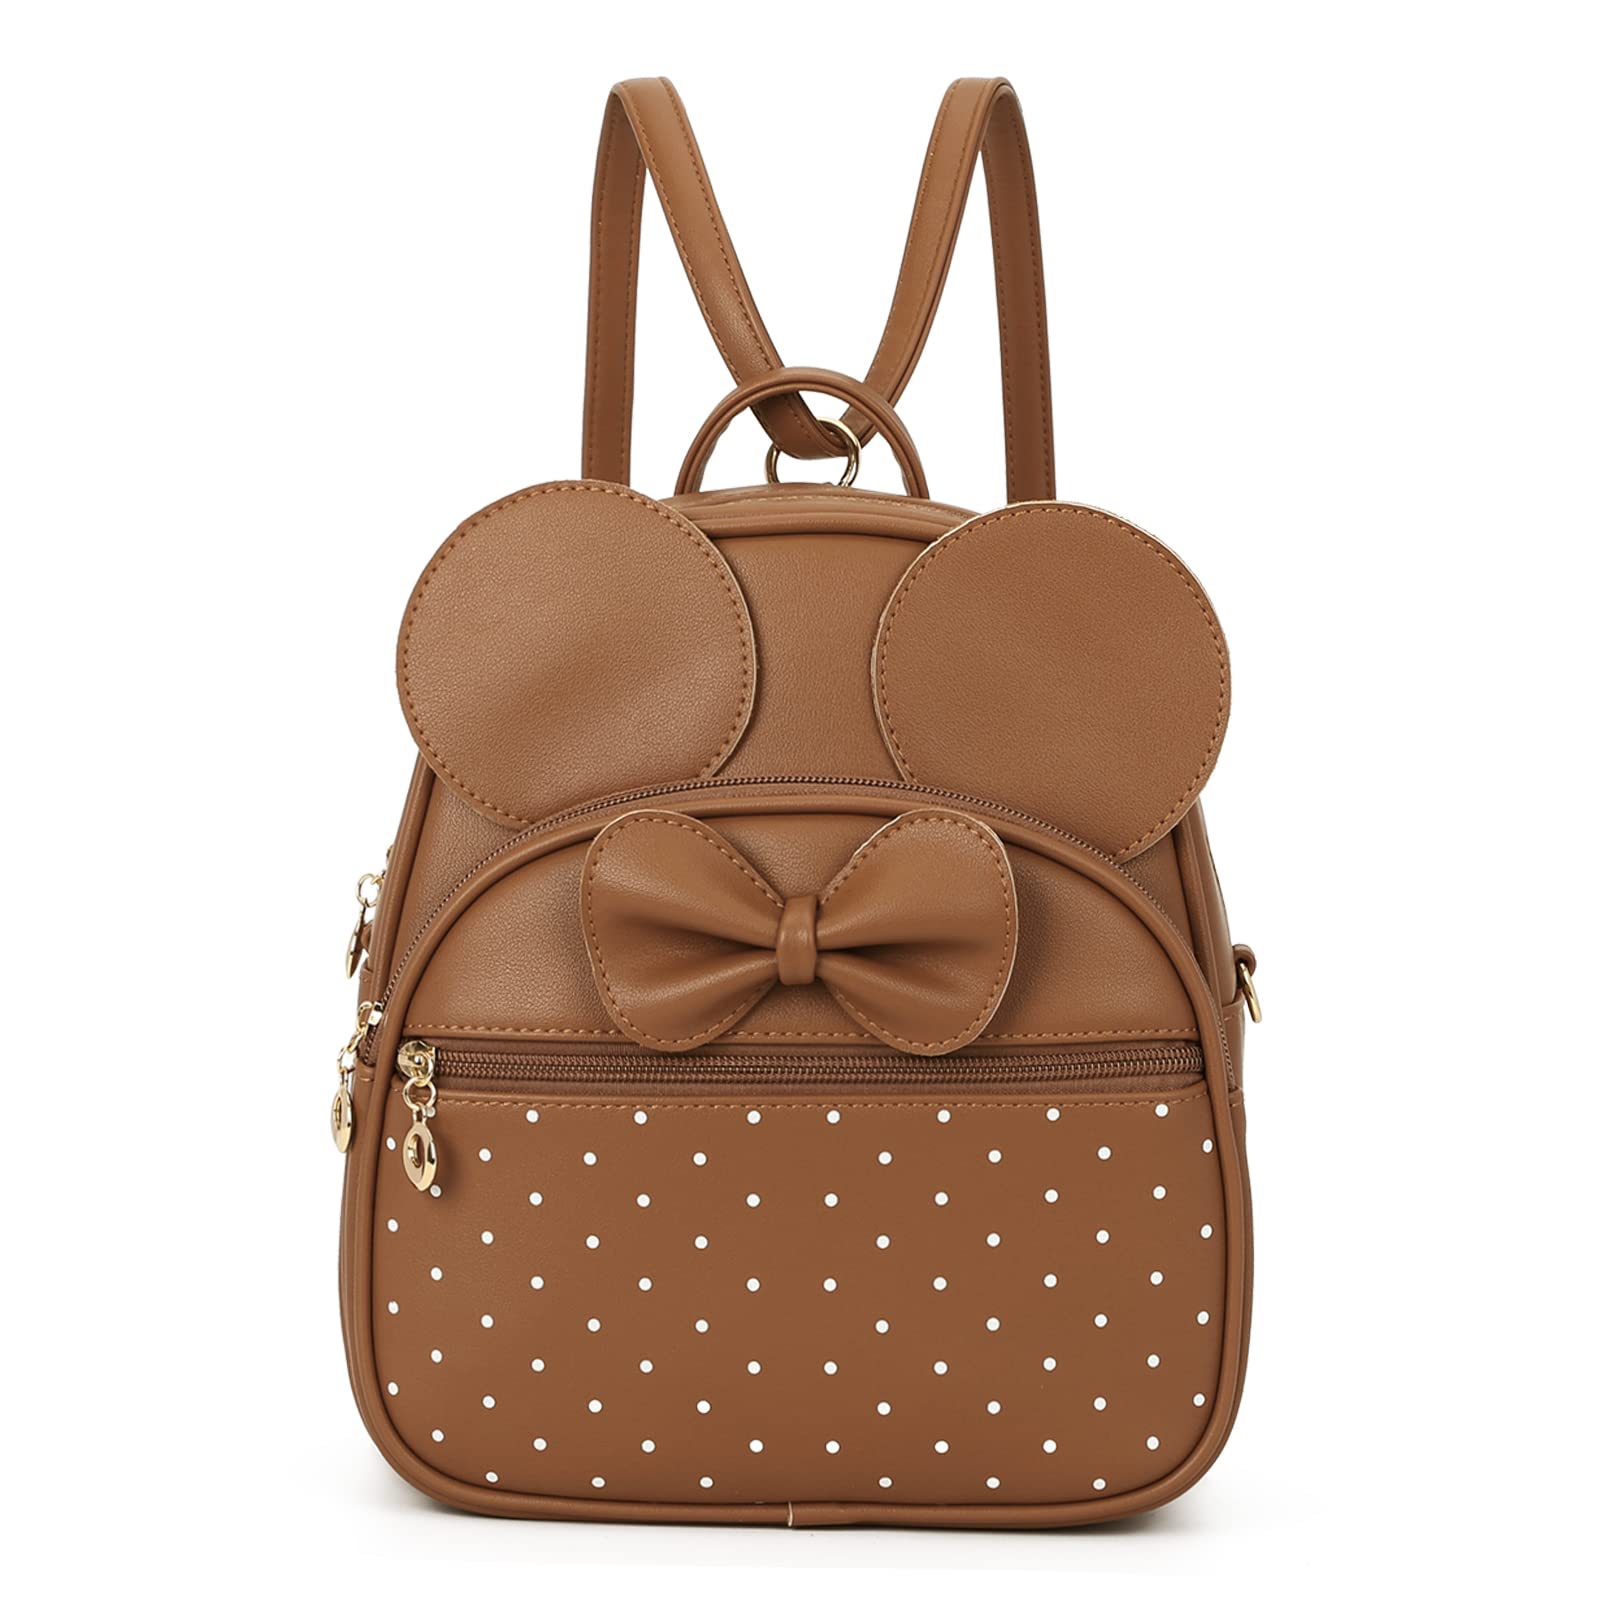 Girls Mini Backpack Bowknot Polka Dot Cute Daypacks Convertible Shoulder Bag Purse for Women (Brown)